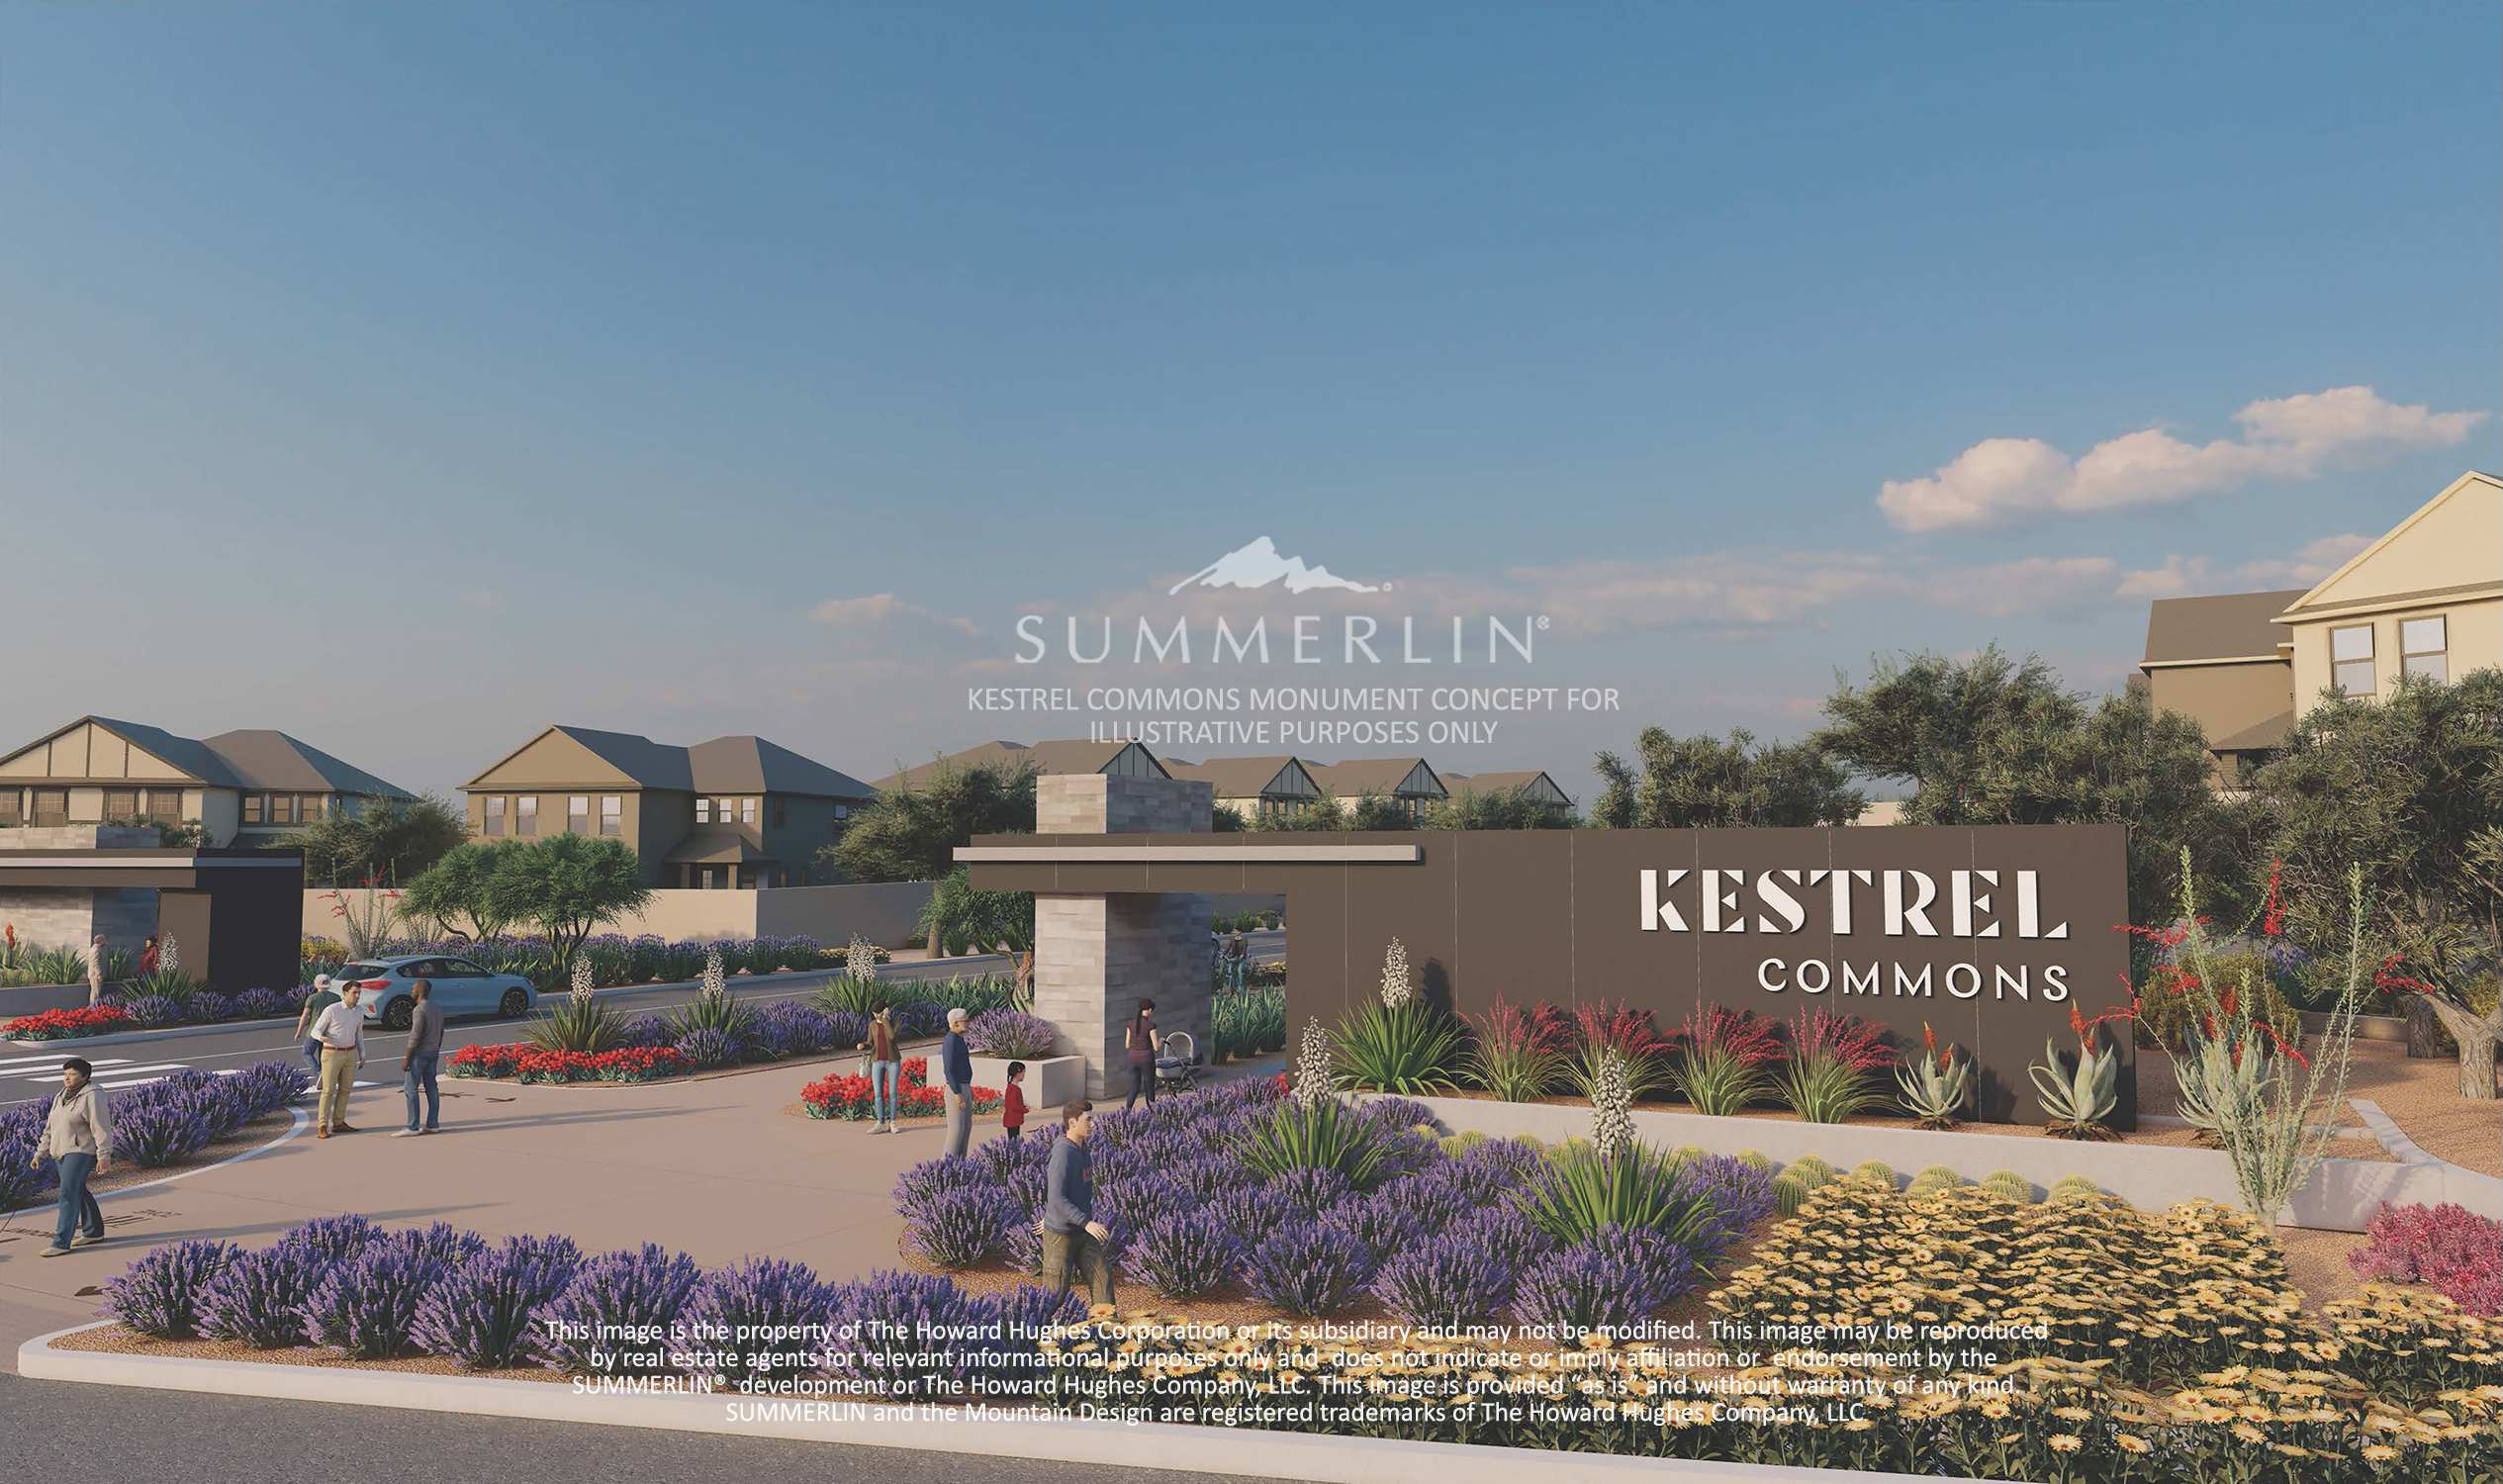 Kestrel Commons Gateway Monumentation